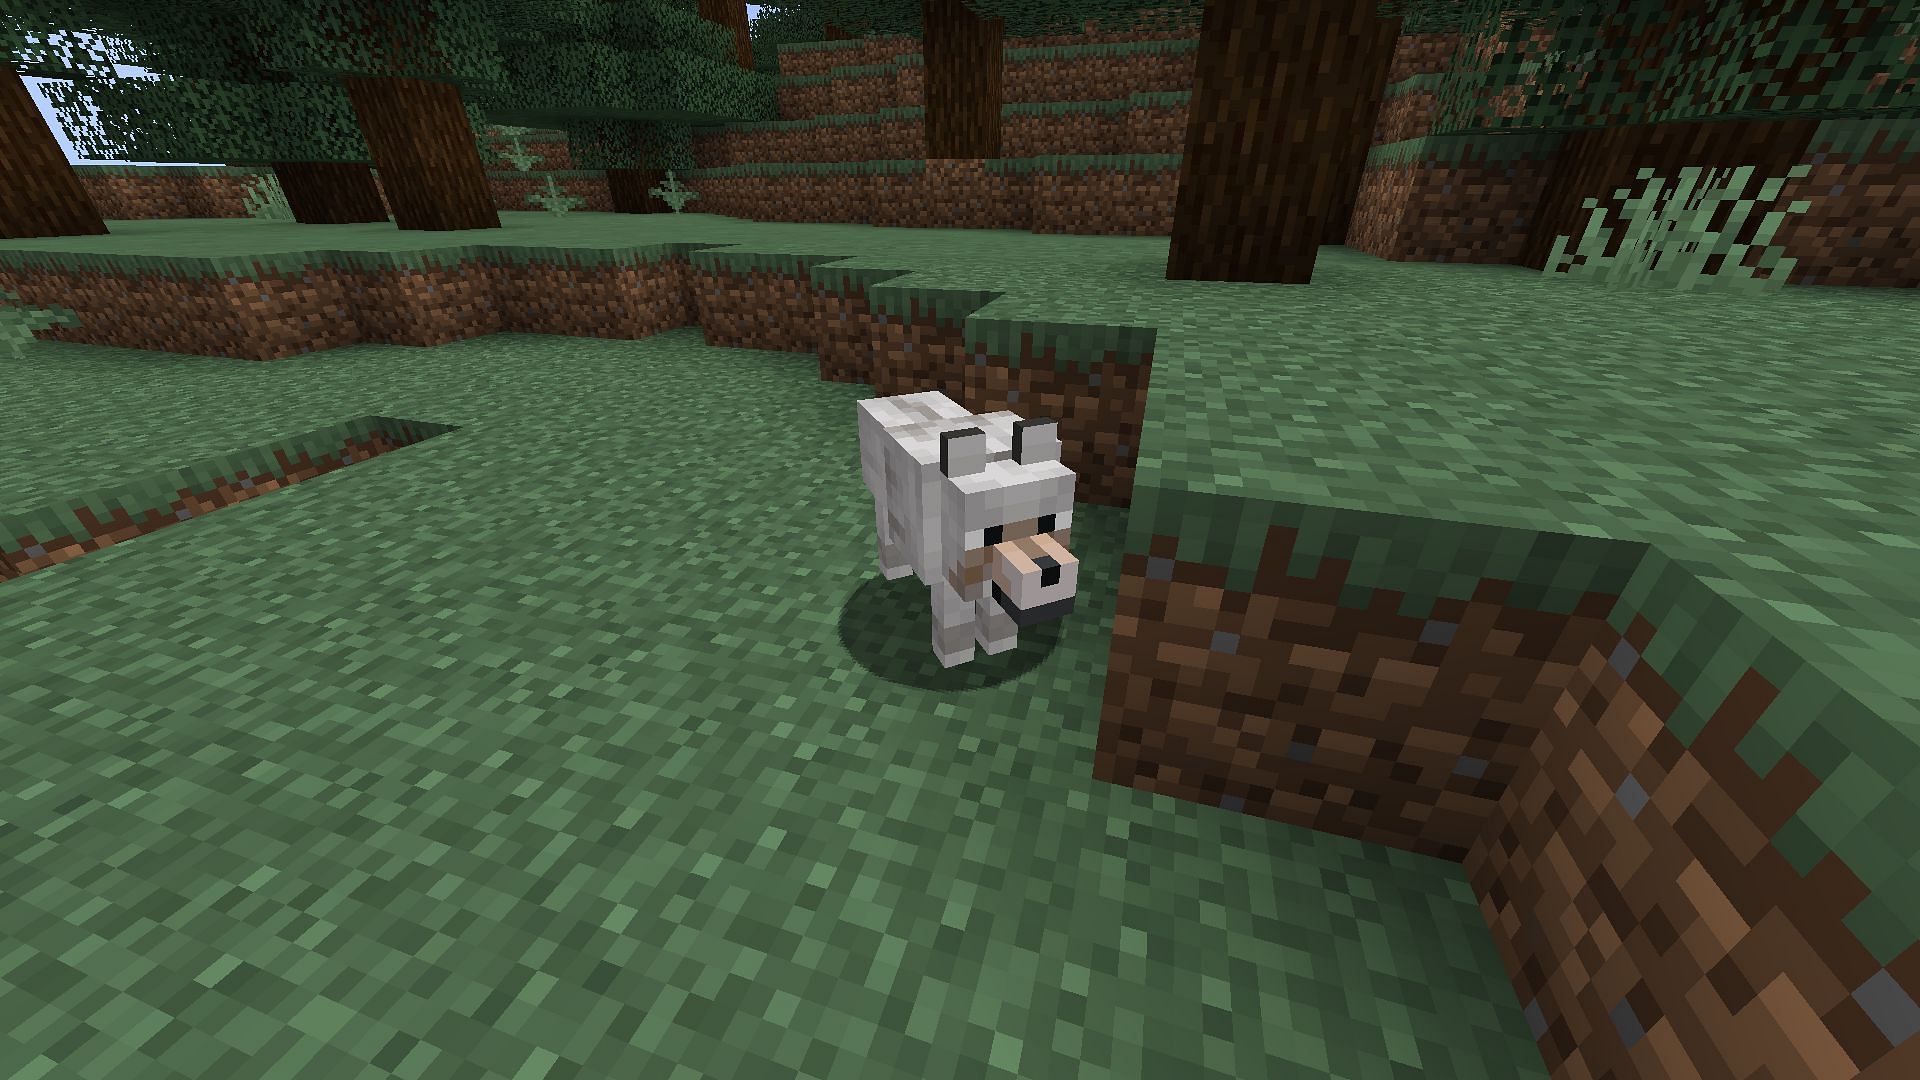 Wolf in Minecraft (Image via Mojang)